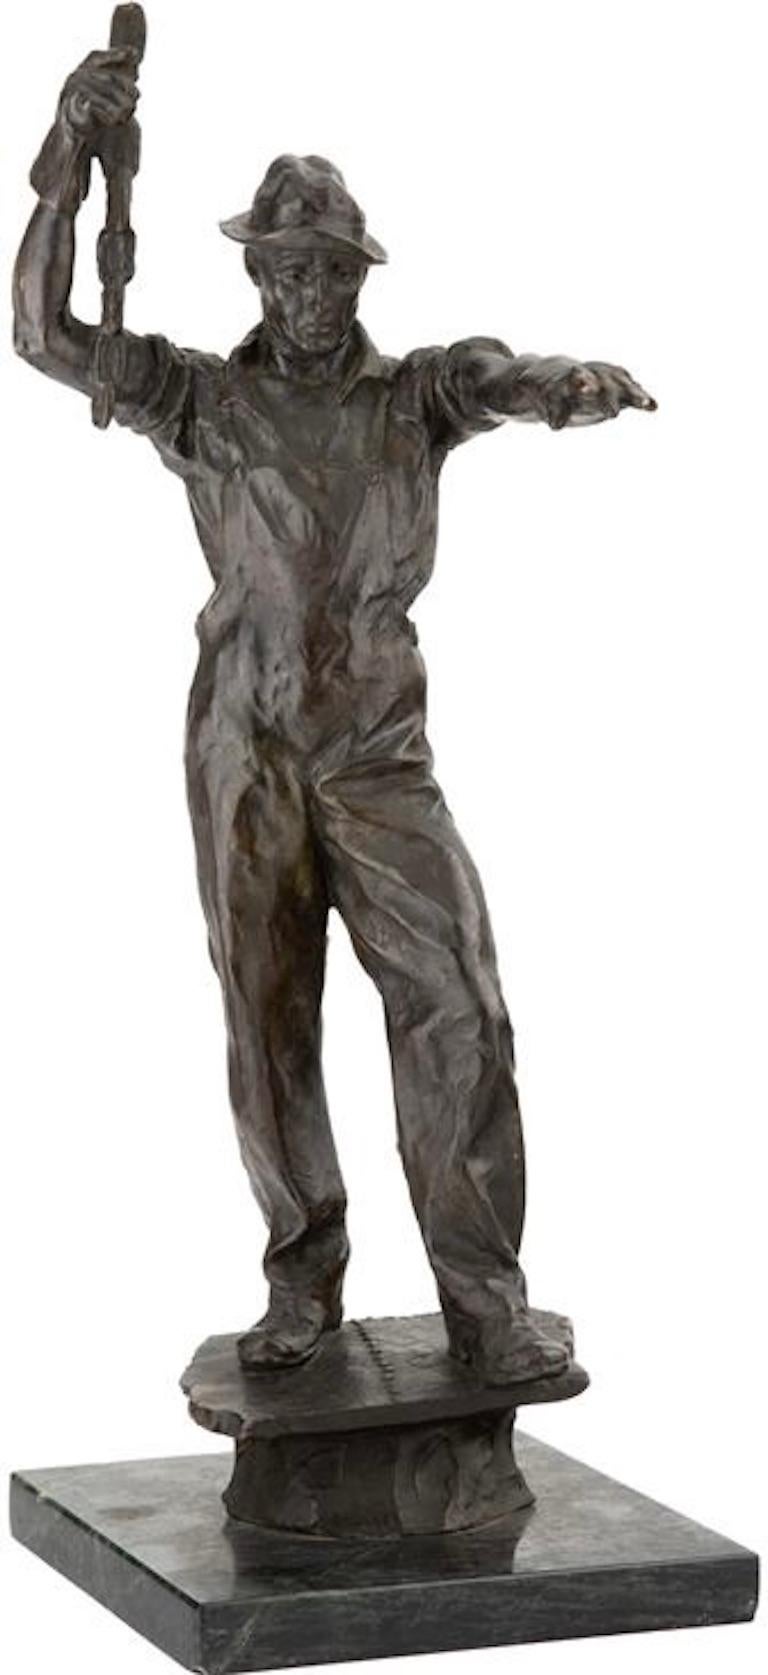 Max Kalish Figurative Sculpture - "Steel Worker" Bronze Sculpture from the artist's Labor Series